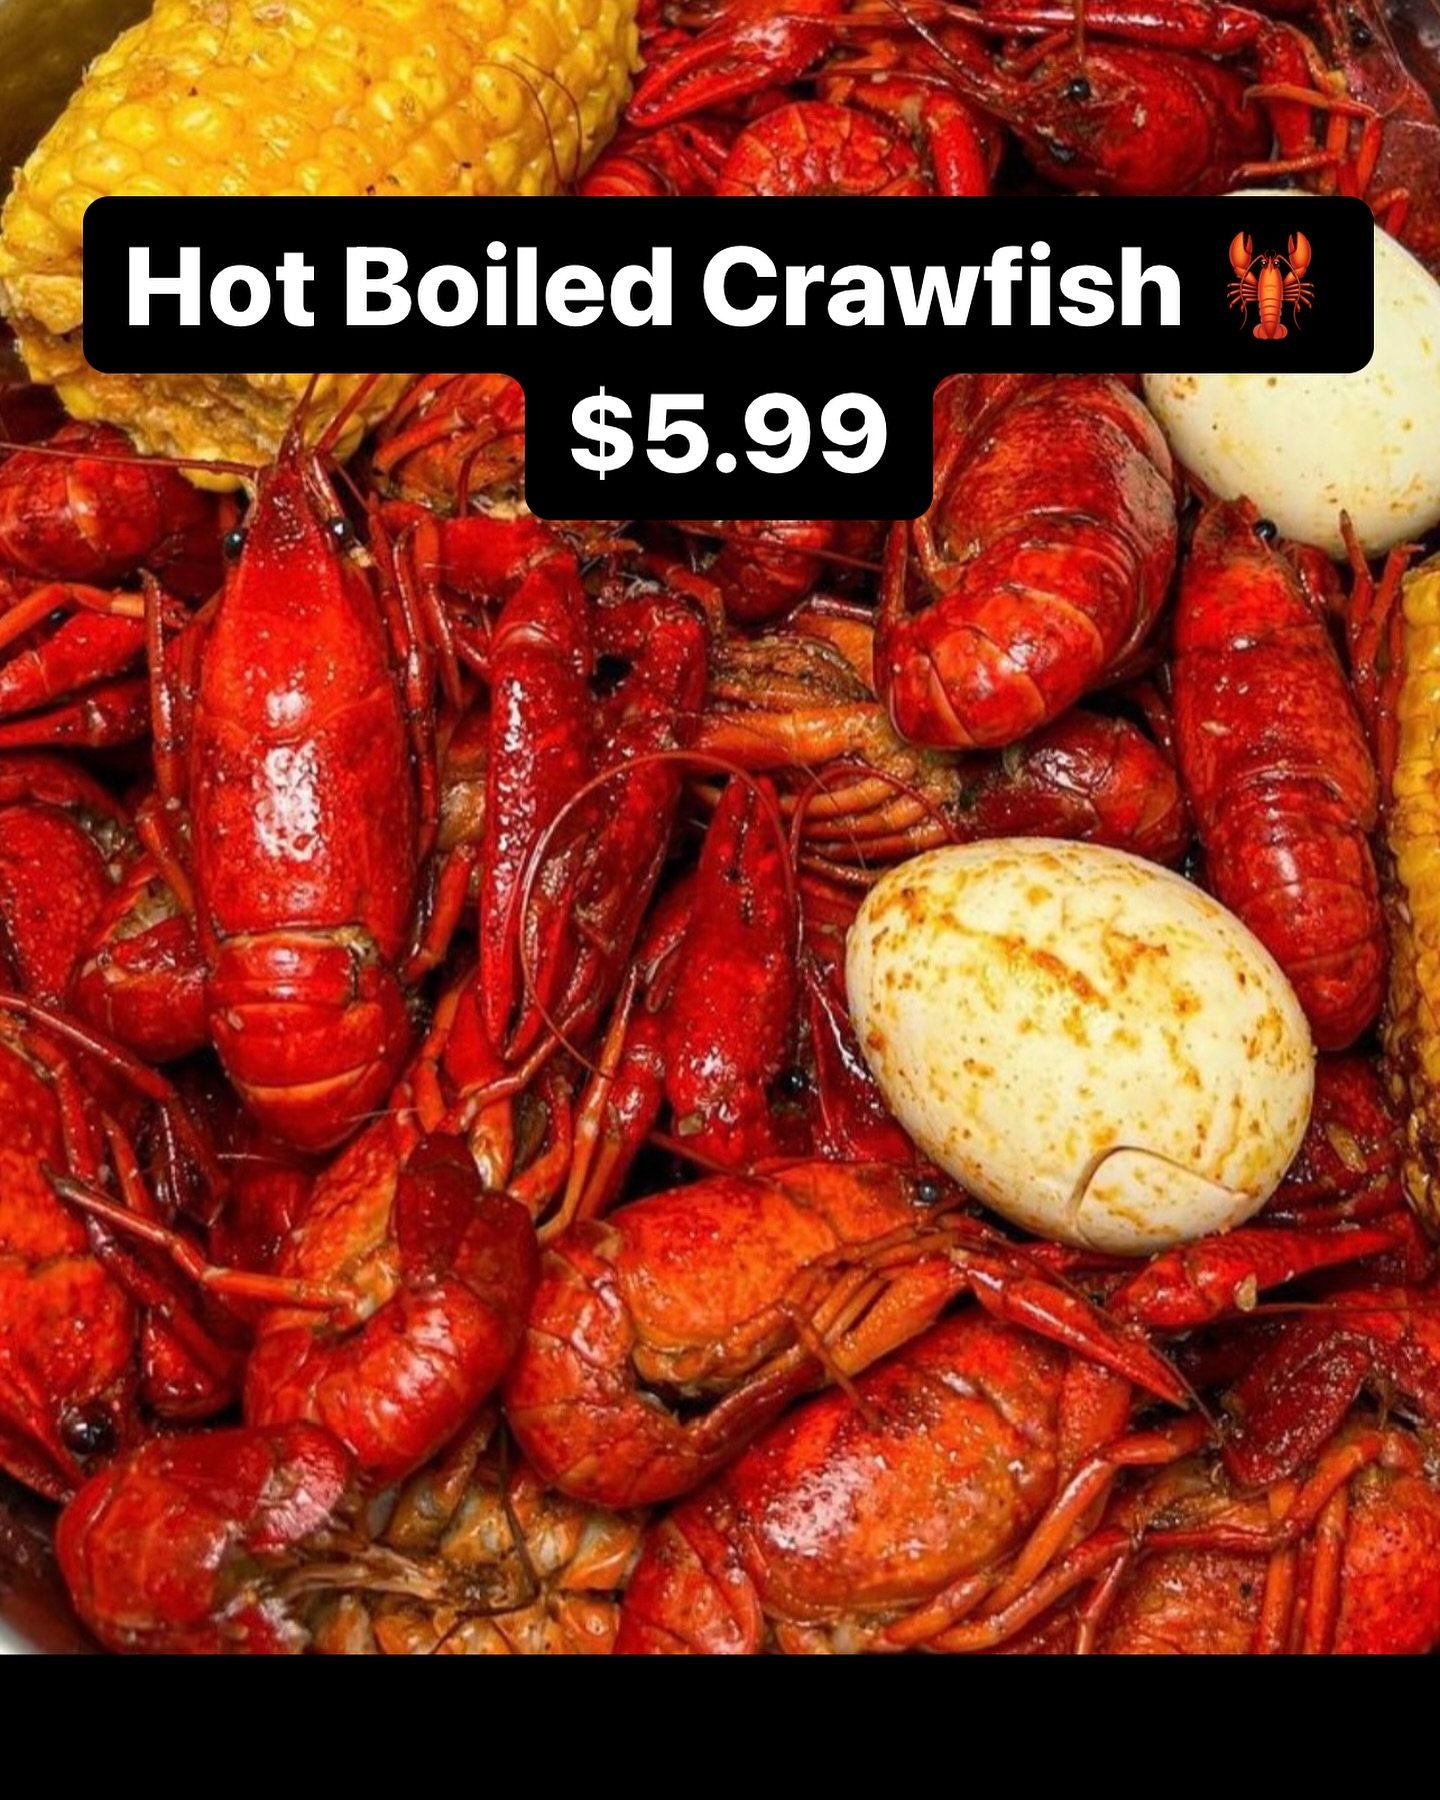 Hot Boiled Crawfish 🦞🦞🦞
$5.99!!!!